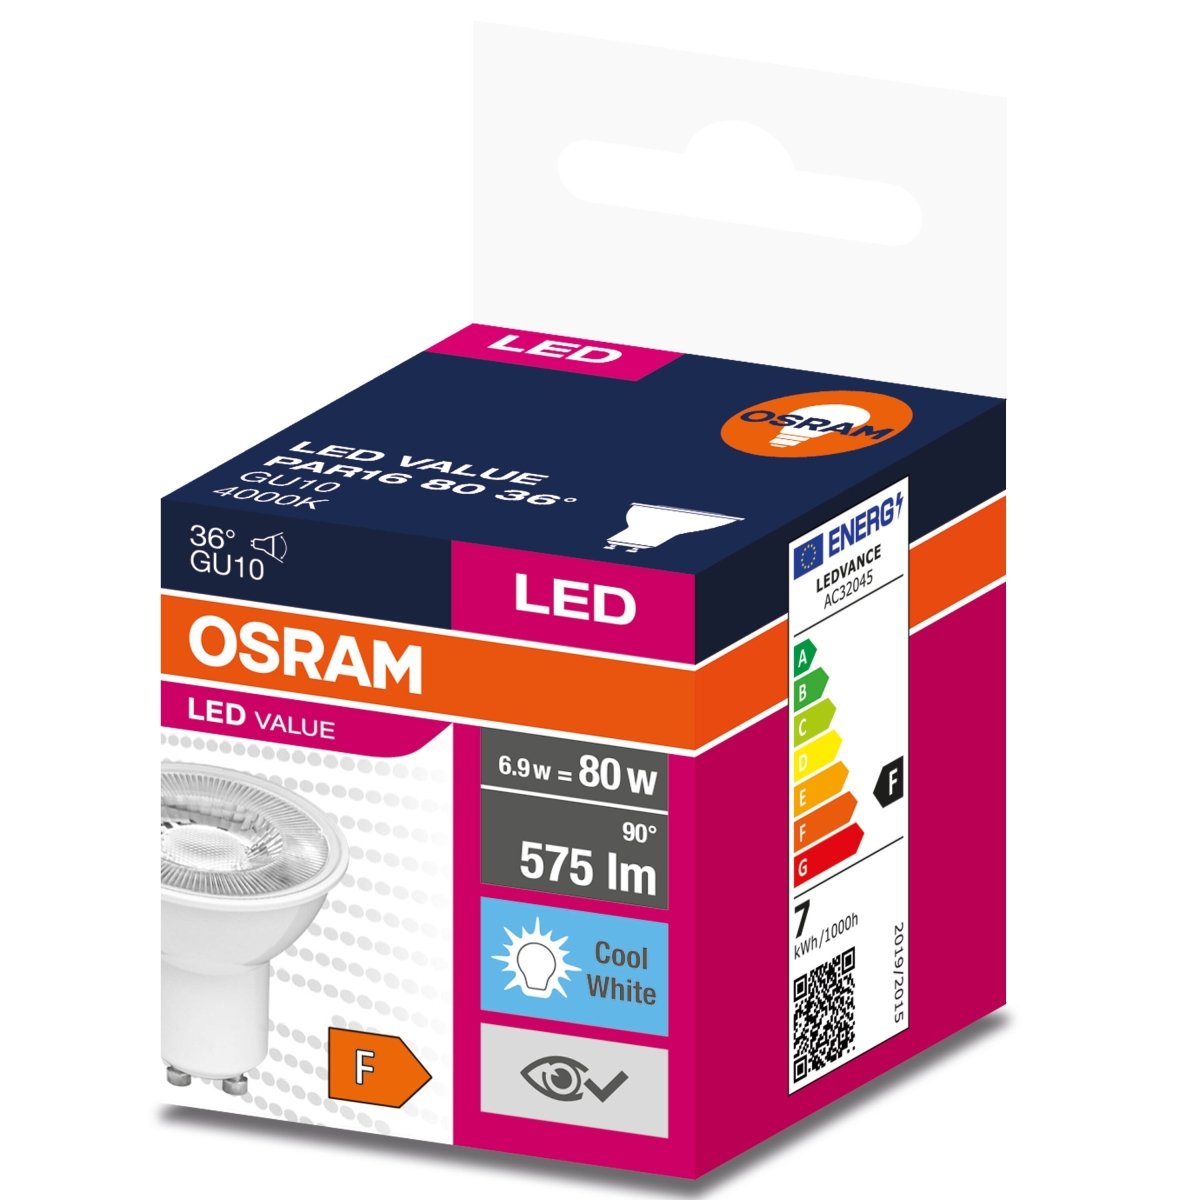 Żarówka LED GU10 6,9W LED VALUE OSRAM, odpowiednik 80W, 36 st., barwa neutralna, 1 szt. - eshop LEDVANCE 4058075198791